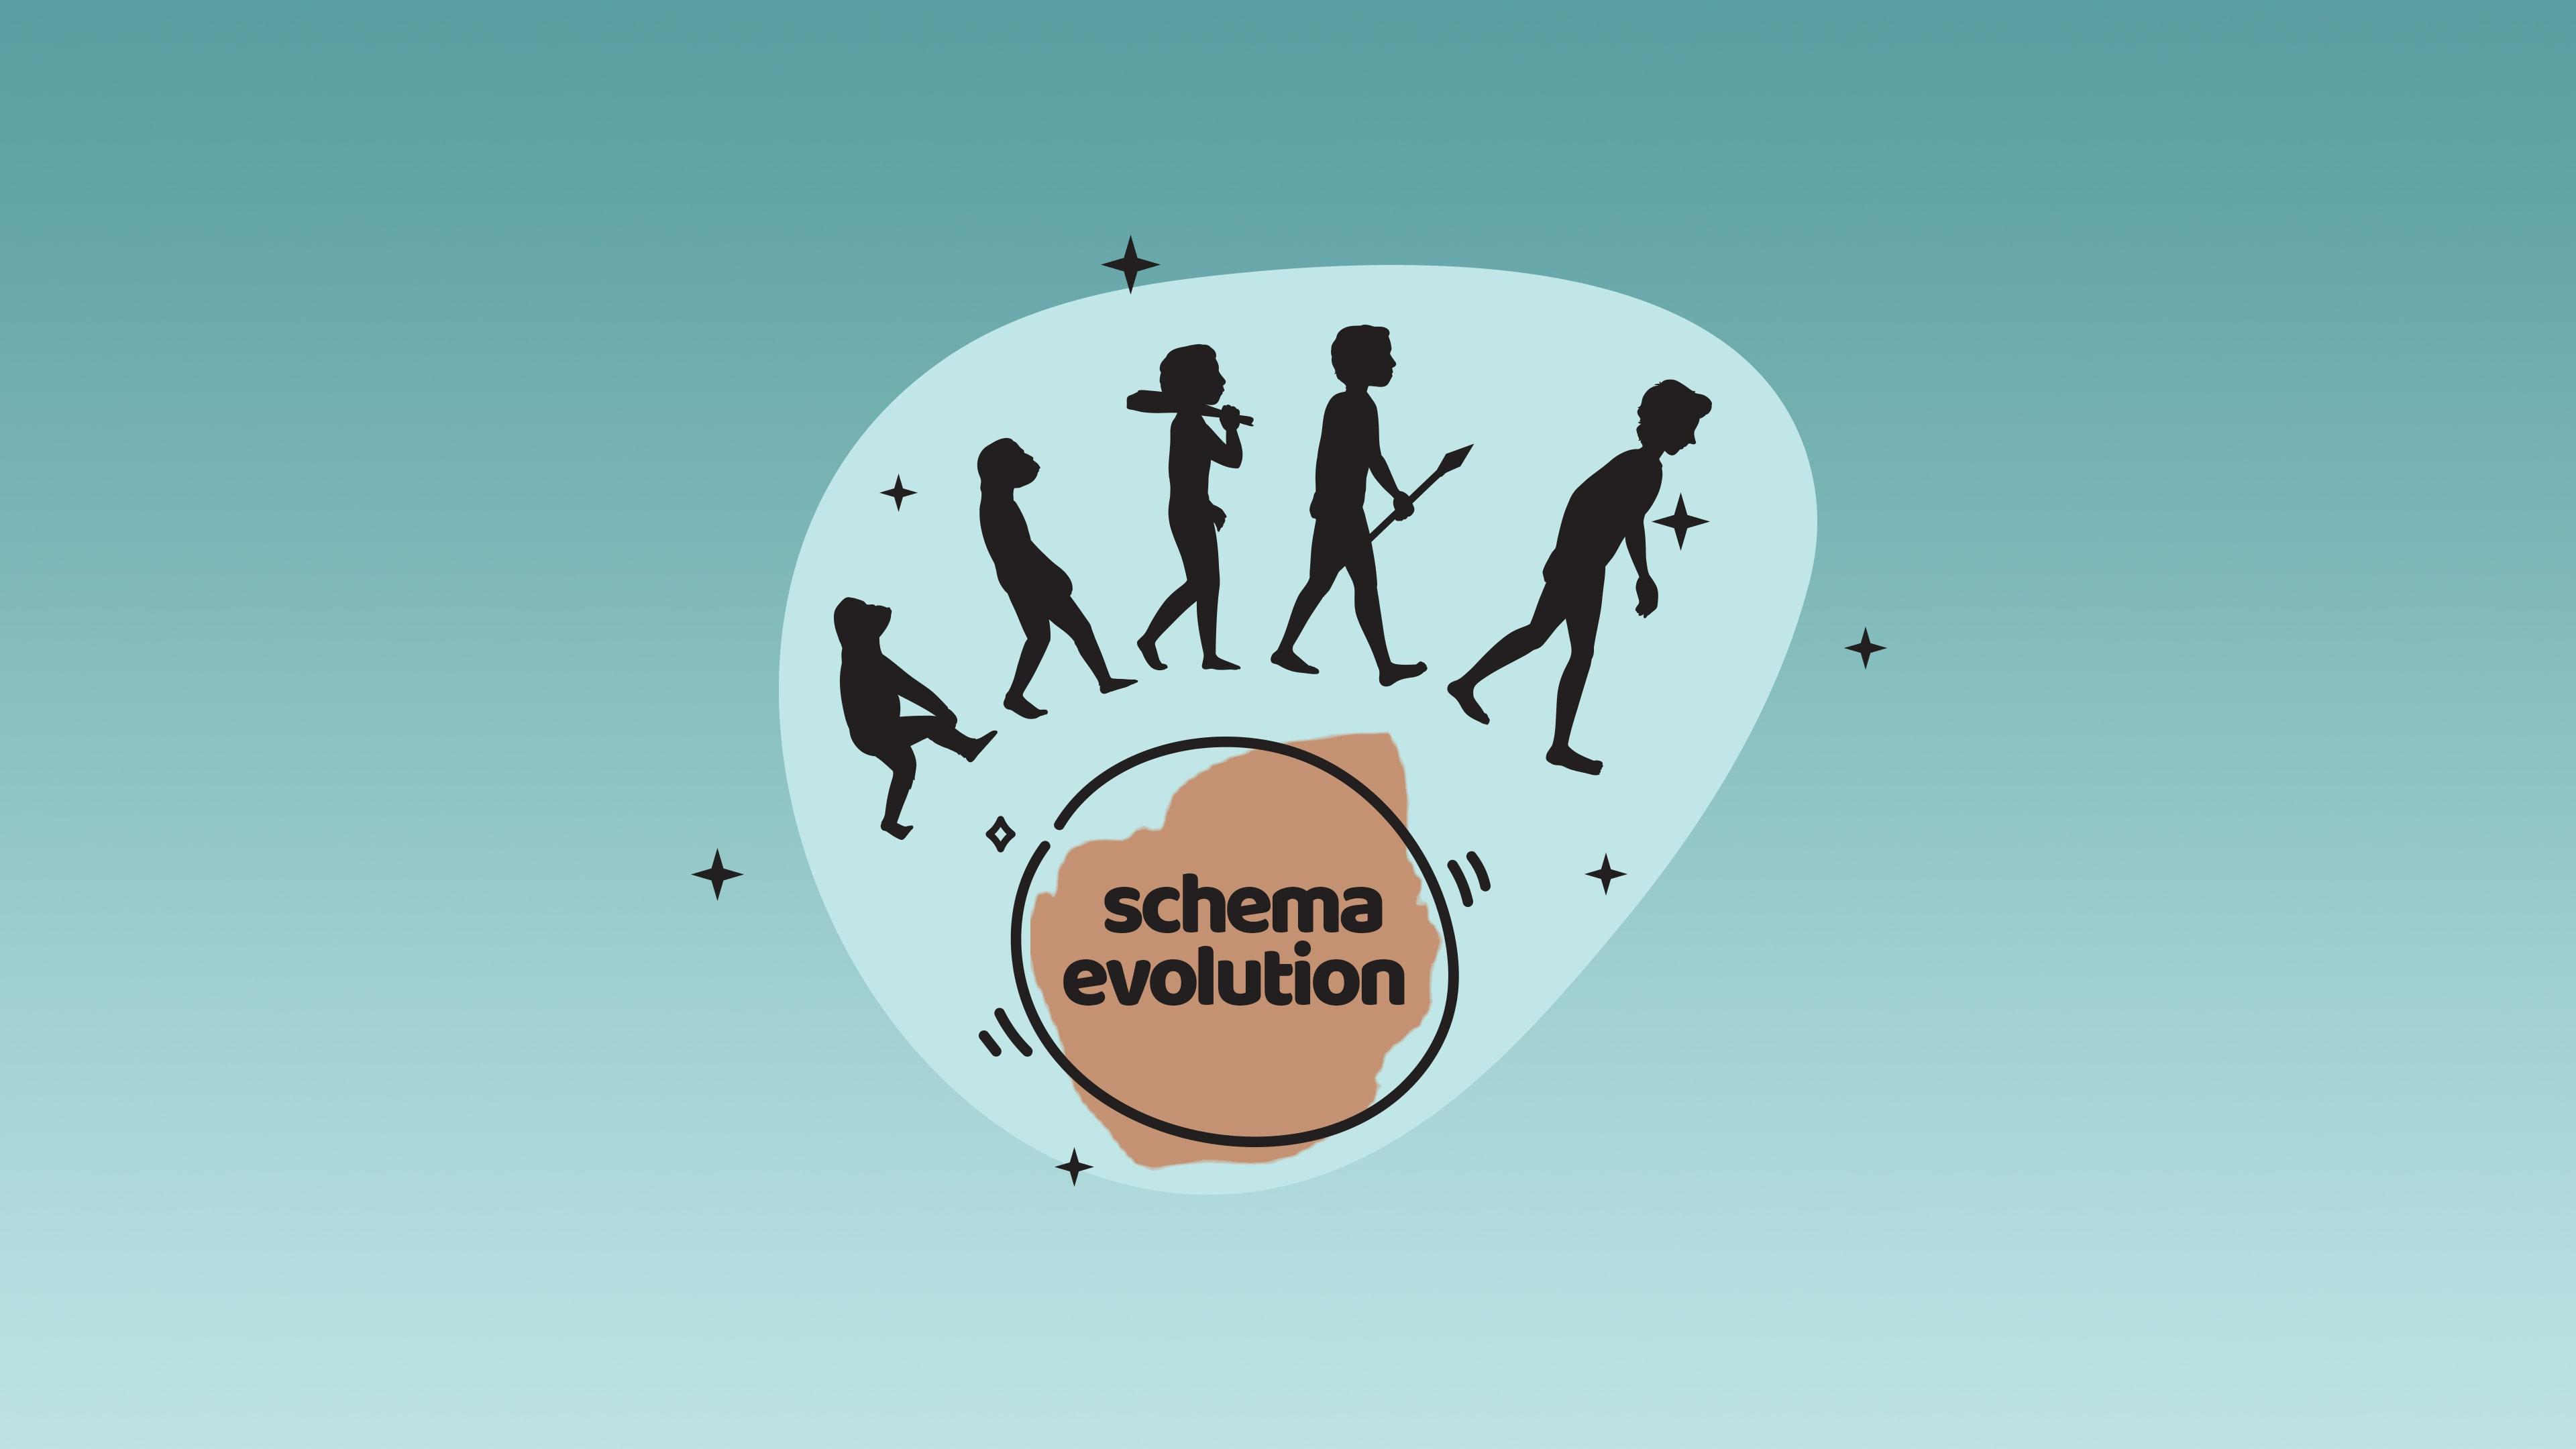 مفهوم سیر تکاملی اسکیما یا Schema Evolution